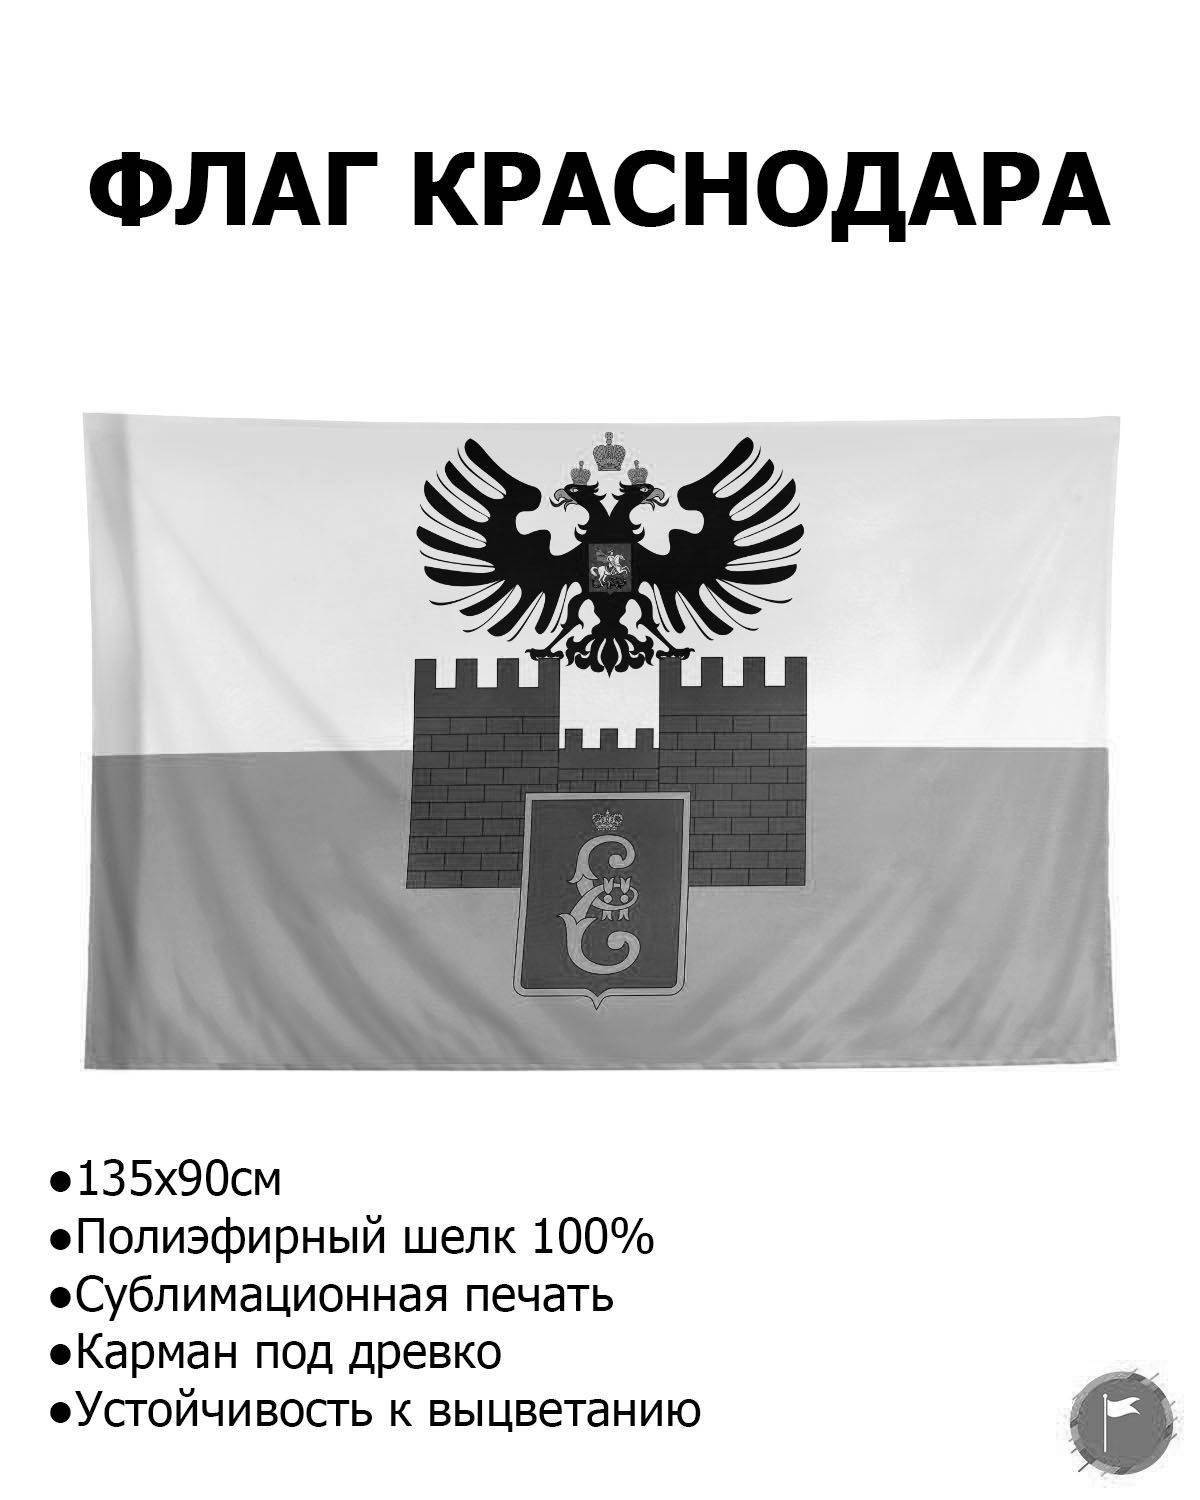 Bewitching flag of krasnodar